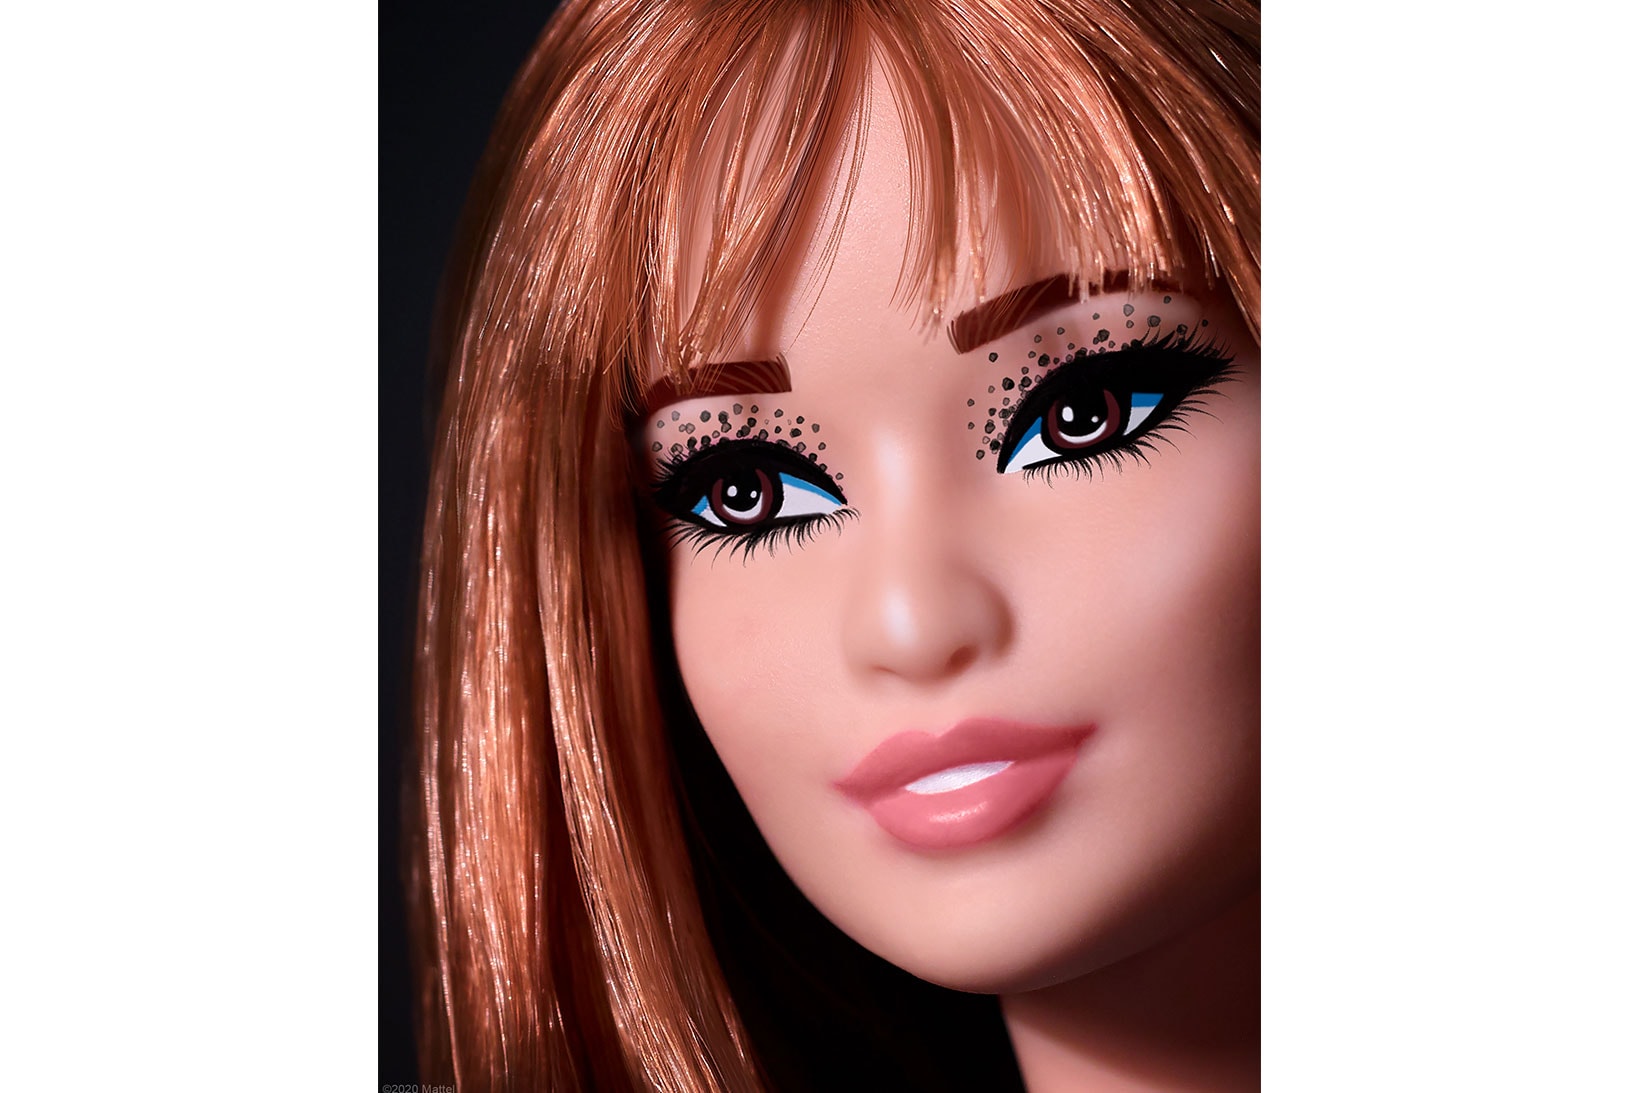 barbie dolls sir john makeup artist beauty editorial collaboration diversity campaign mattel